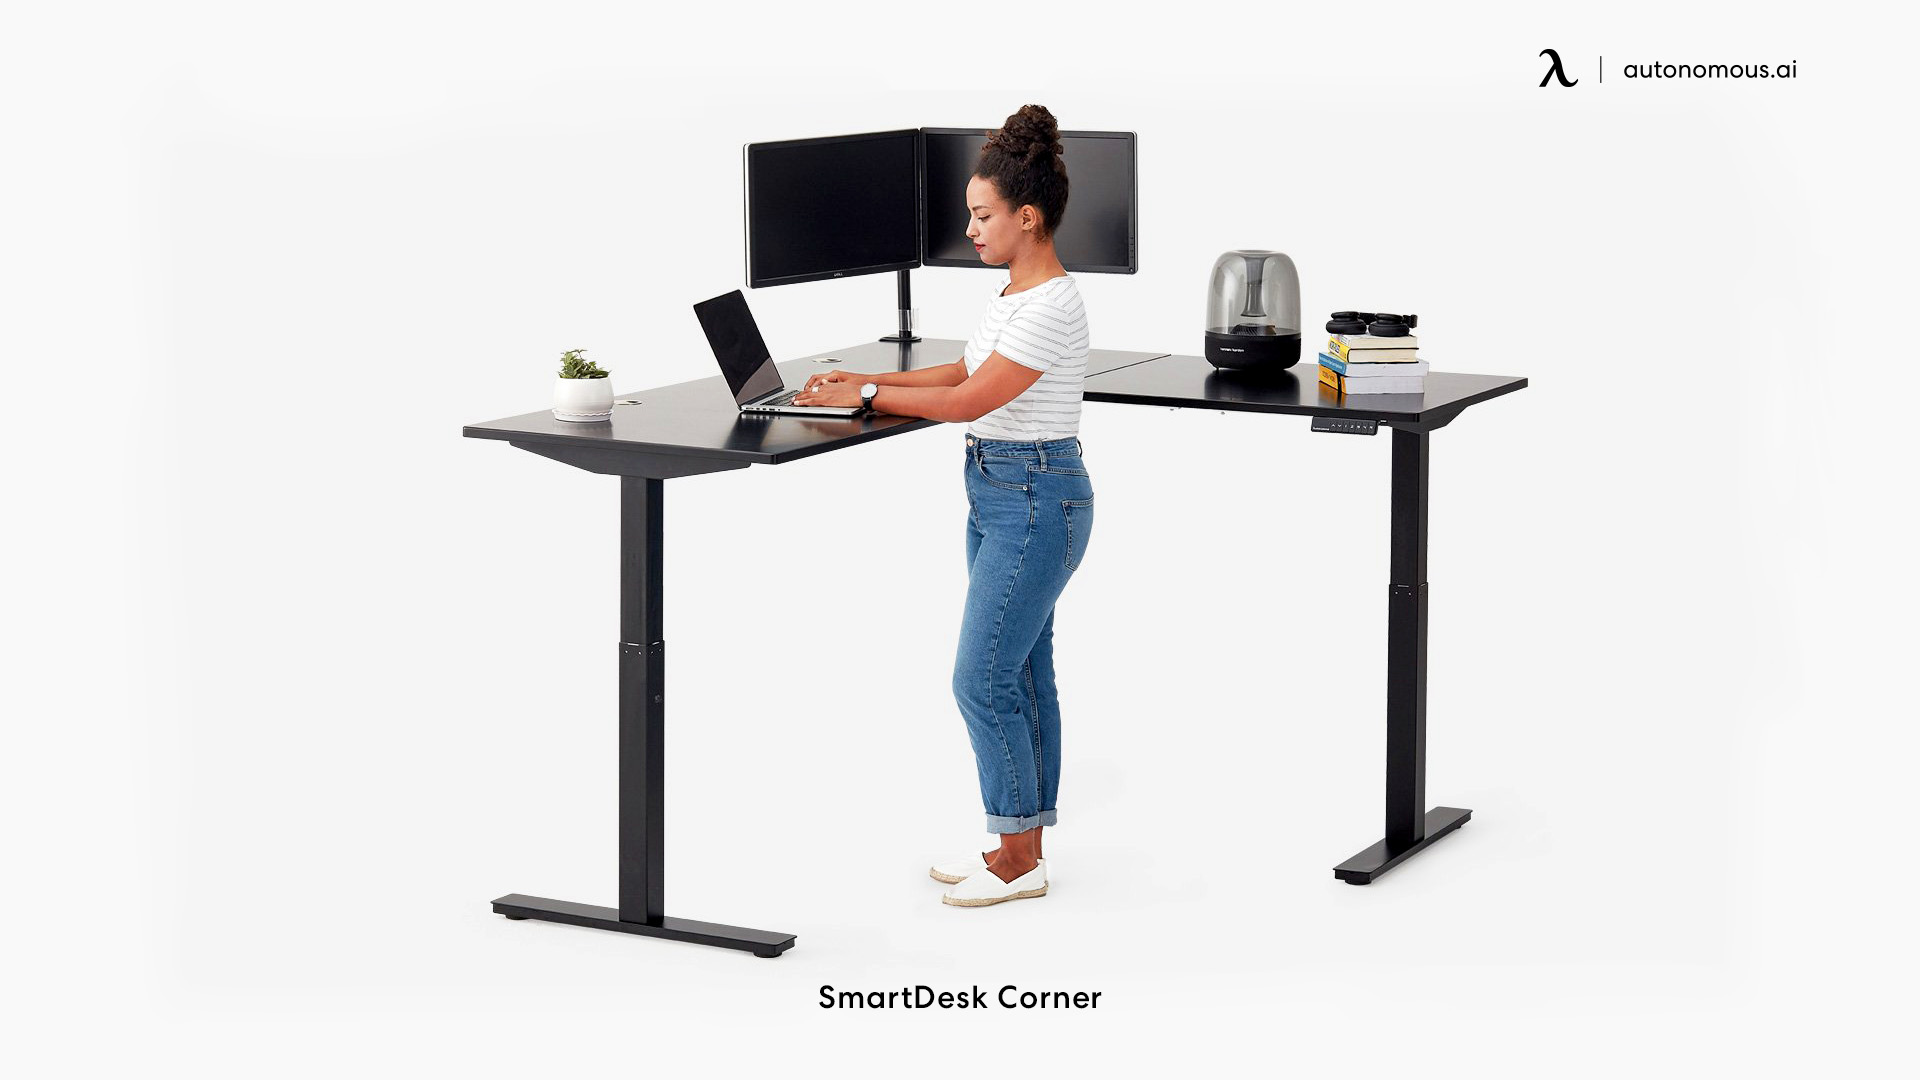 SmartDesk Corner is a height-adjustable work desk